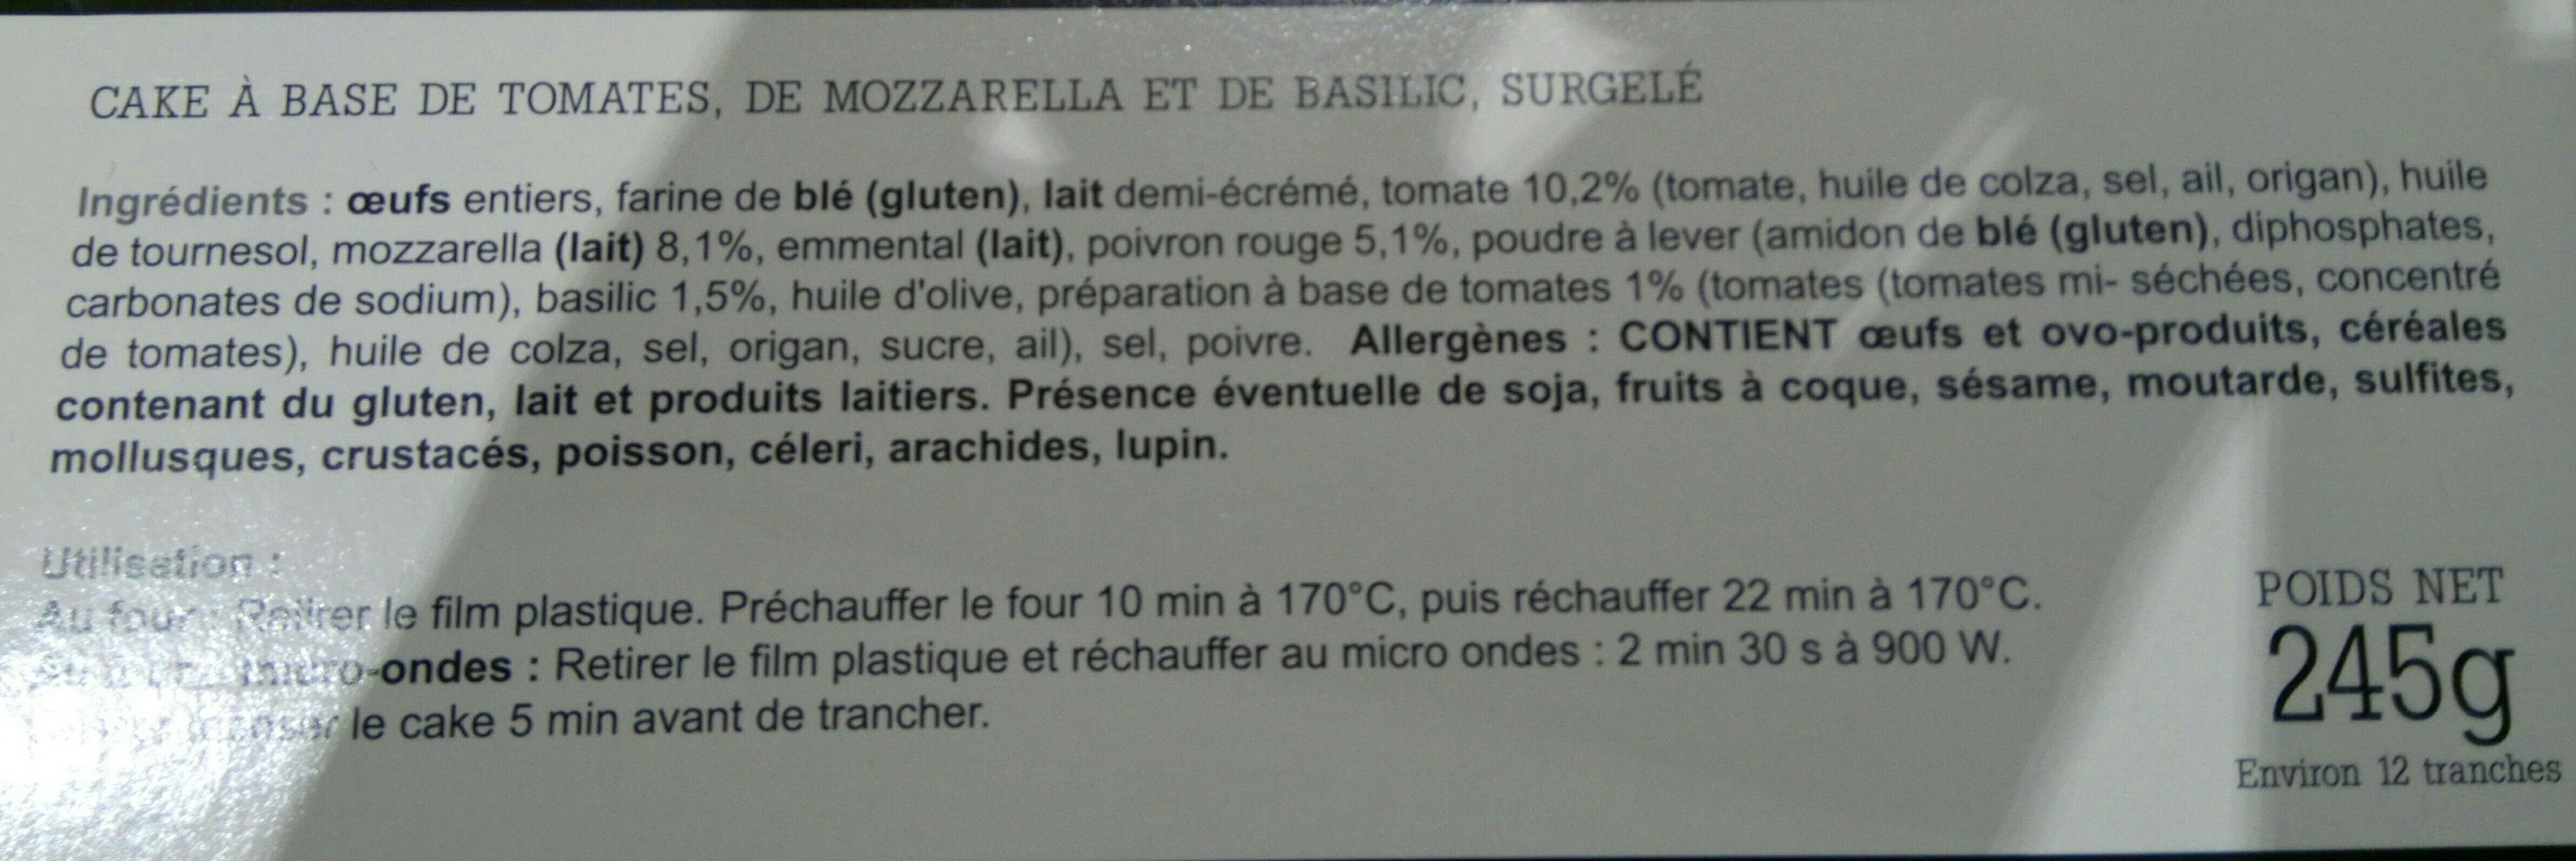 Cake salé tomate mozza basilic - 成分 - fr